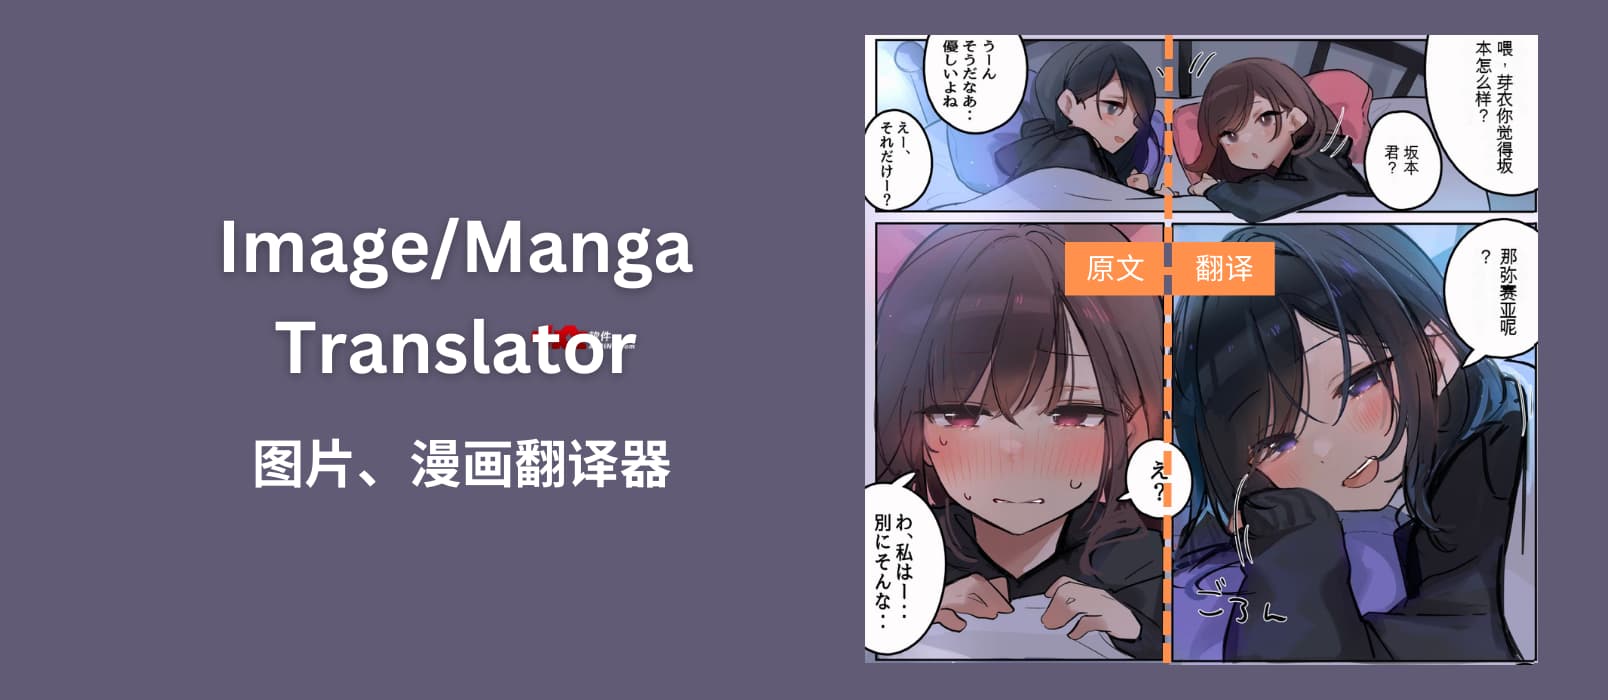 Image/Manga Translator - 图片翻译器、漫画翻译器[自托管]